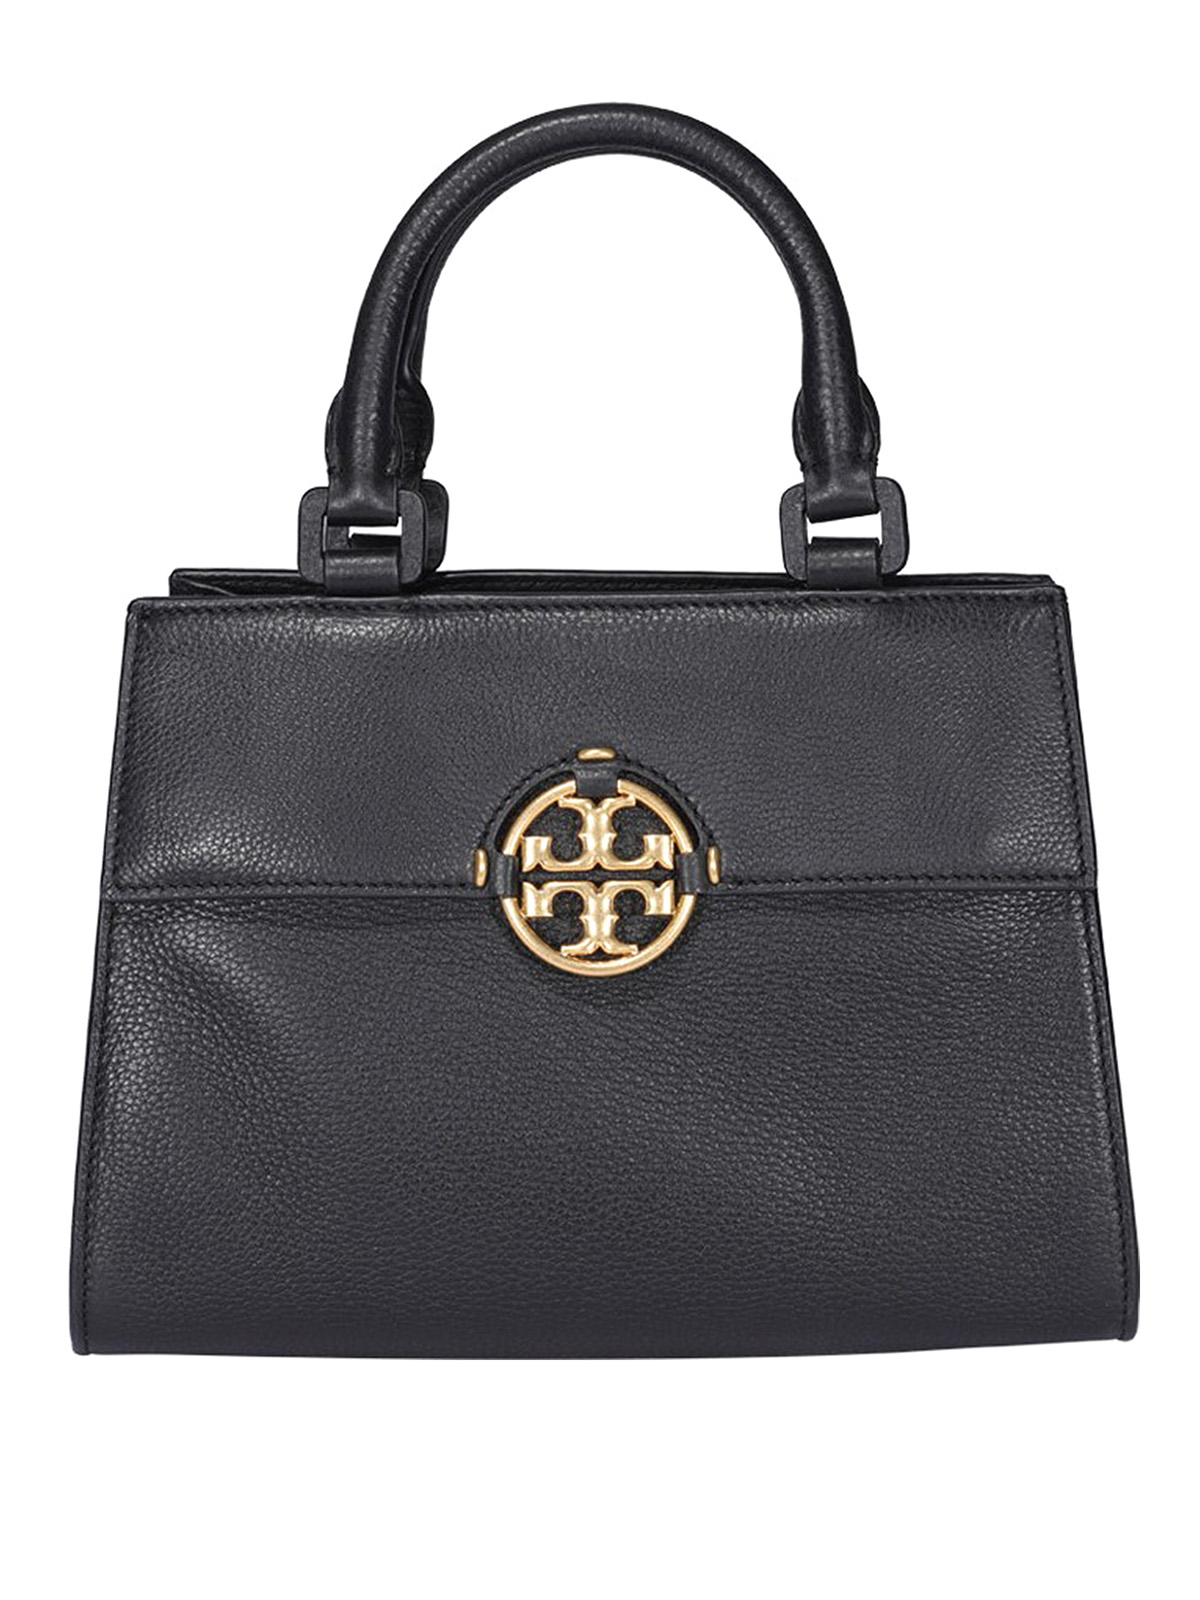 Totes bags Tory Burch - Miller handbag - 79329001 | Shop online at iKRIX